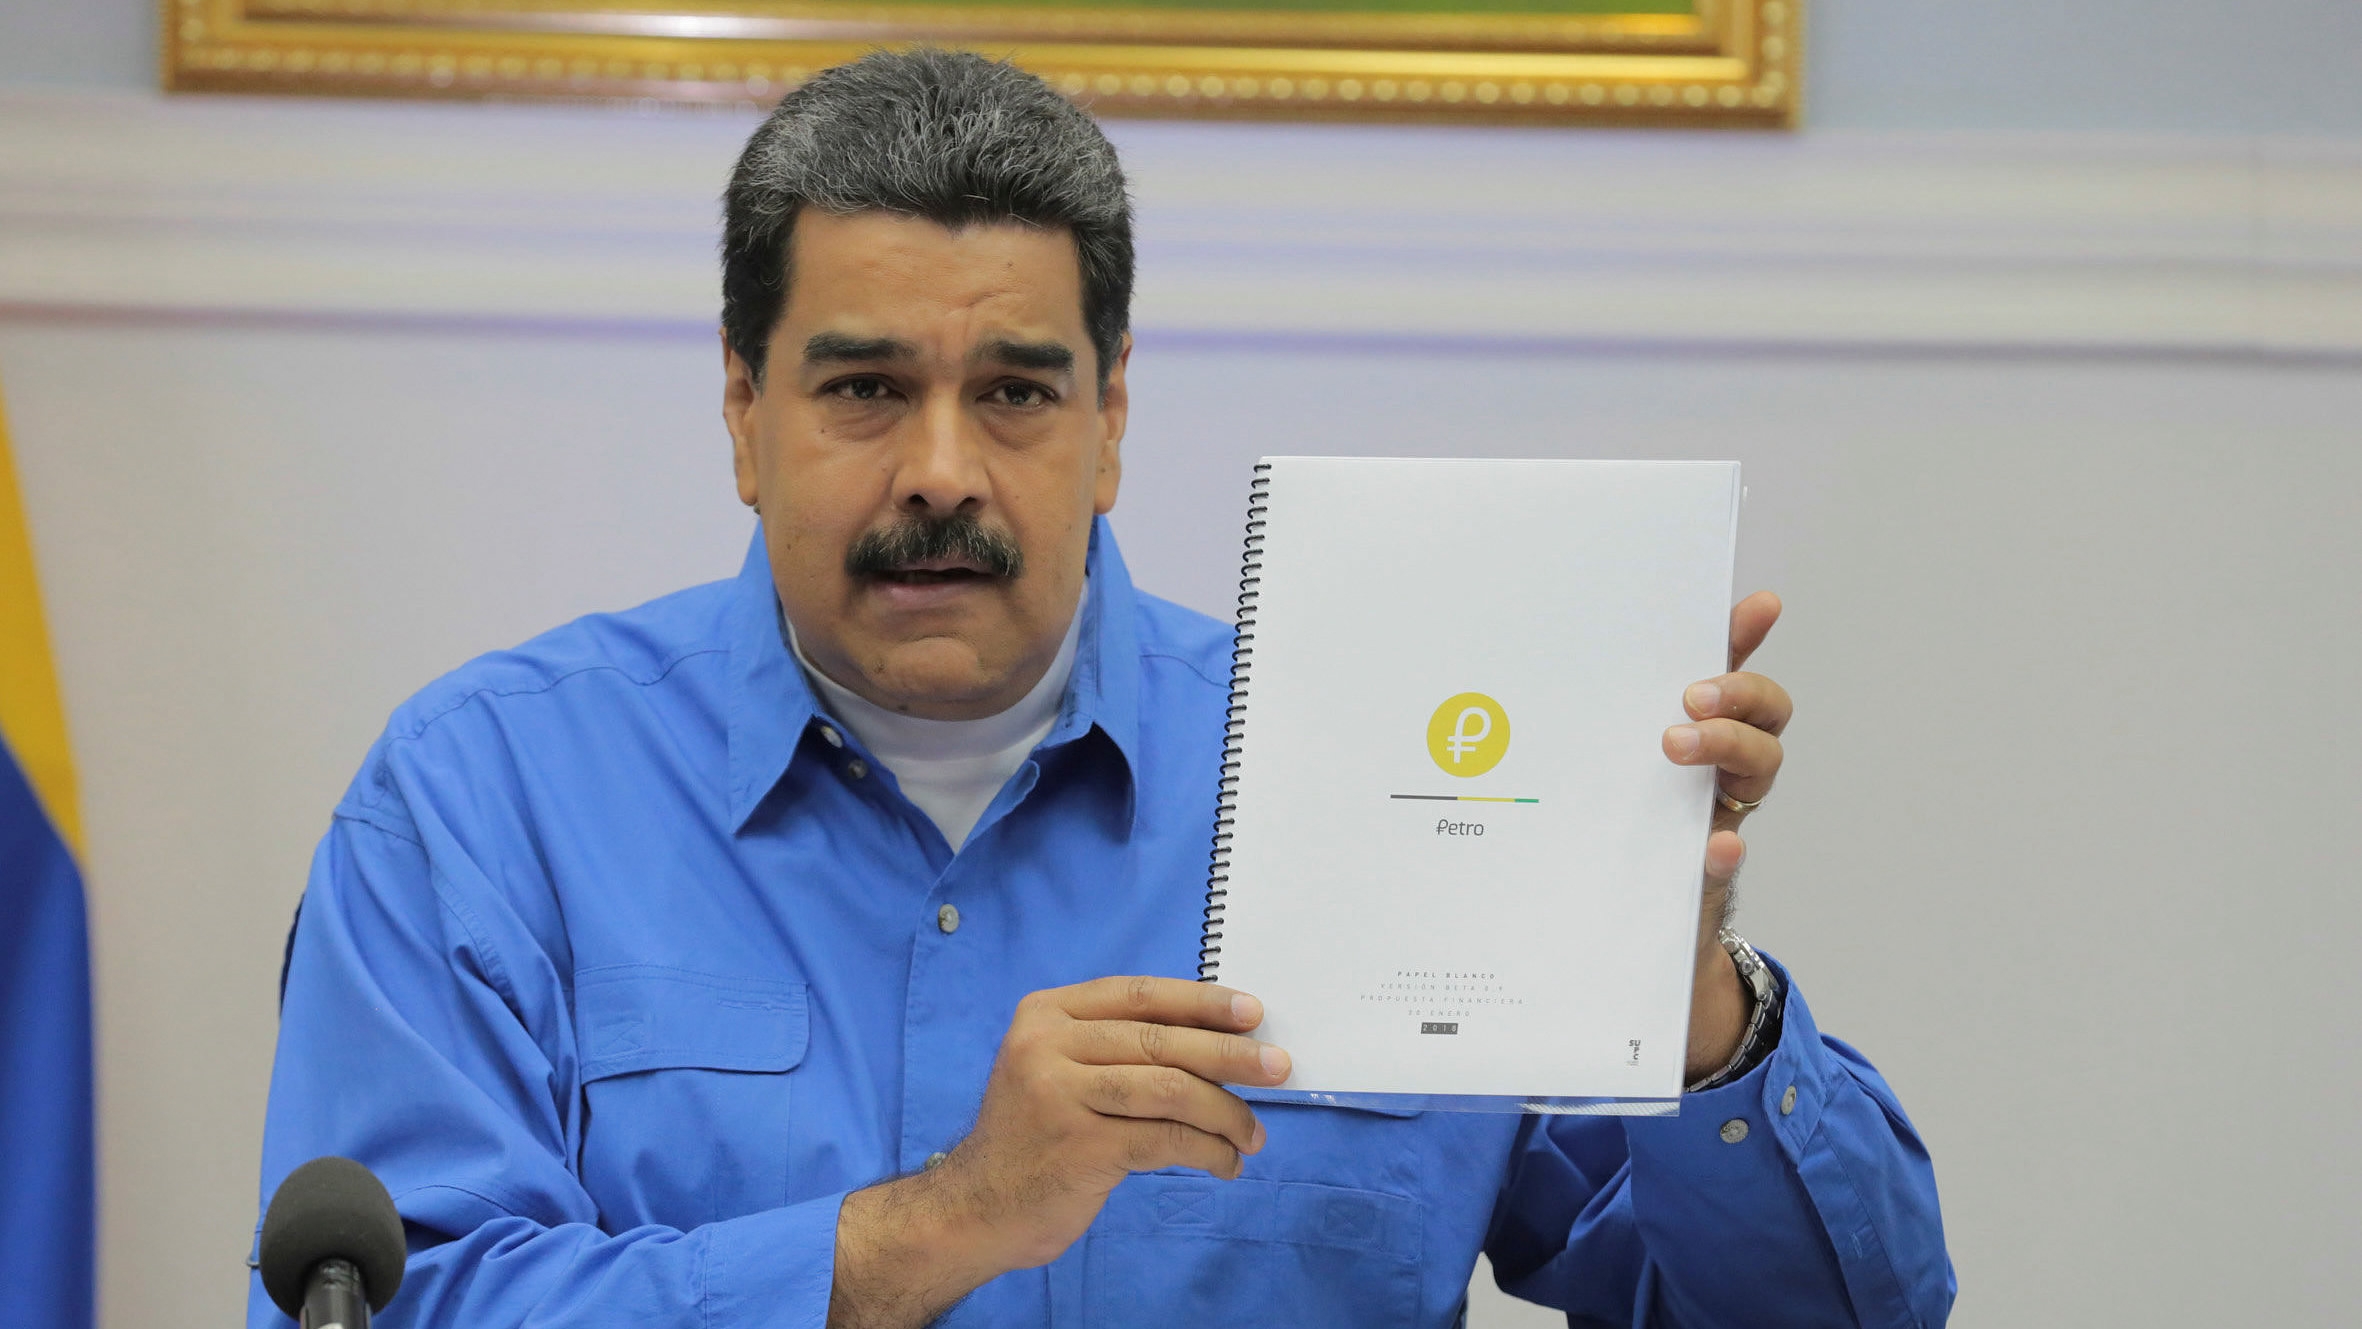 venezuela launches oil cryptocurrency